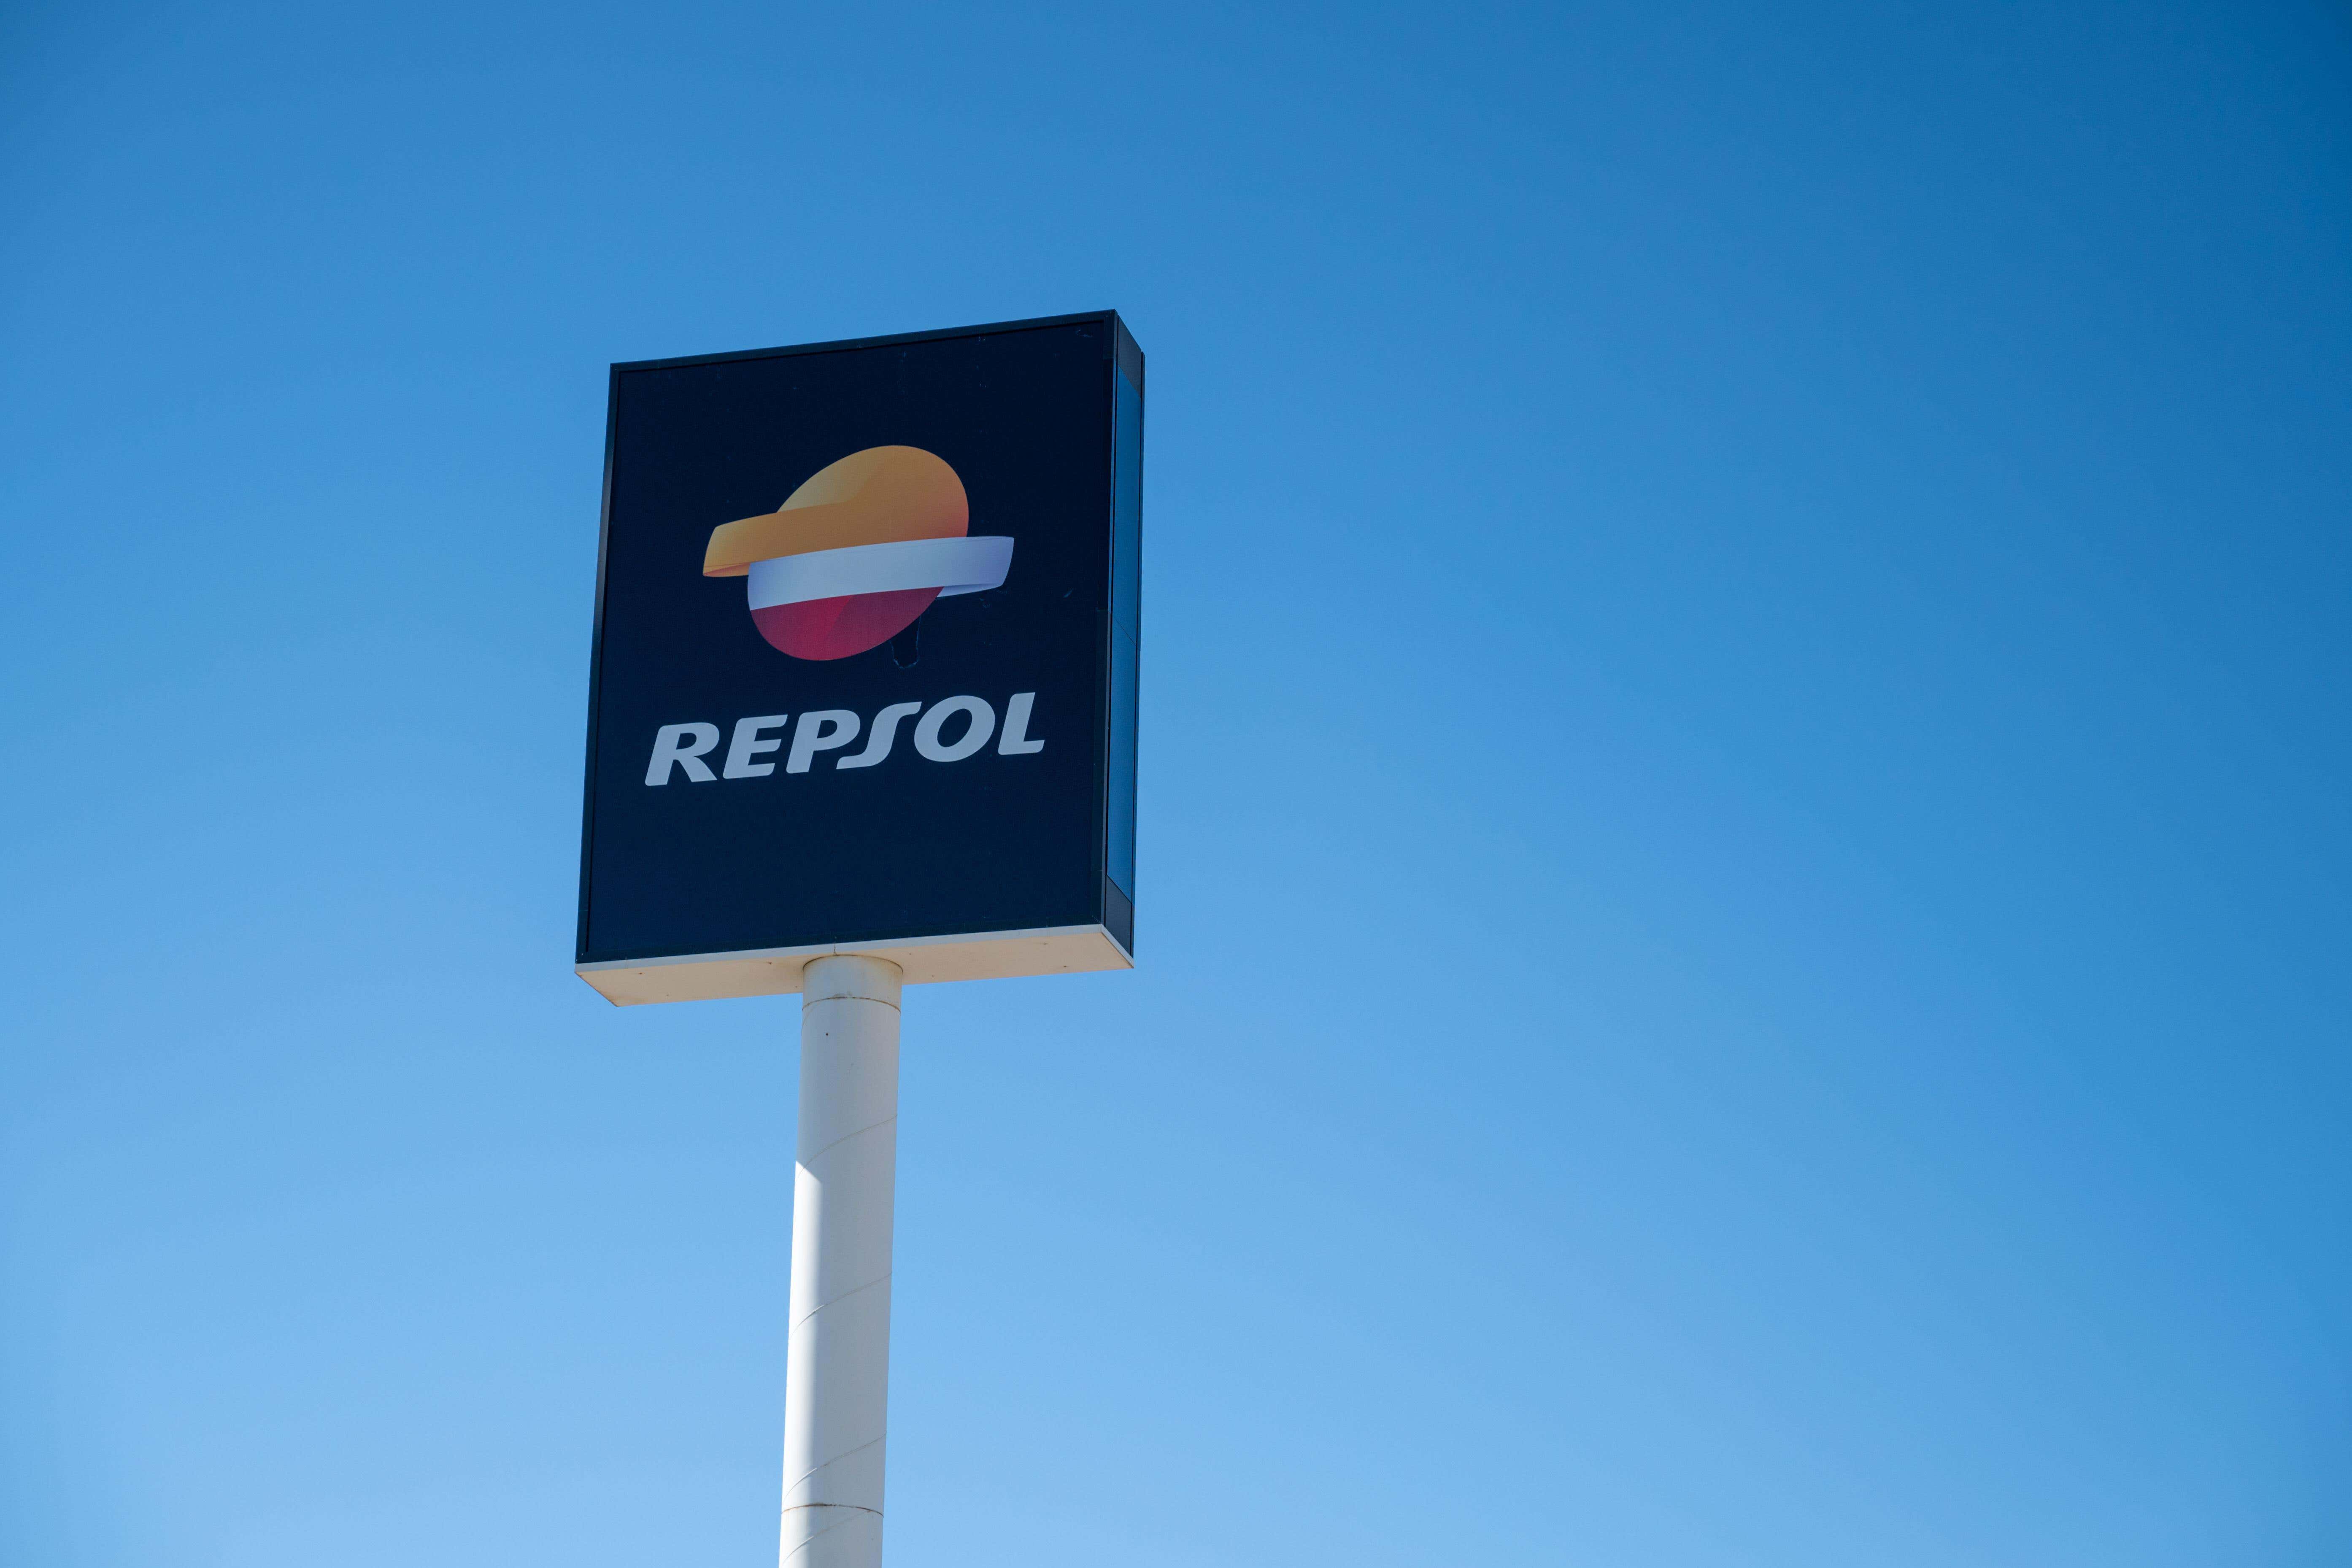 US denies Repsol's request for Venture Global LNG approvals | Reuters